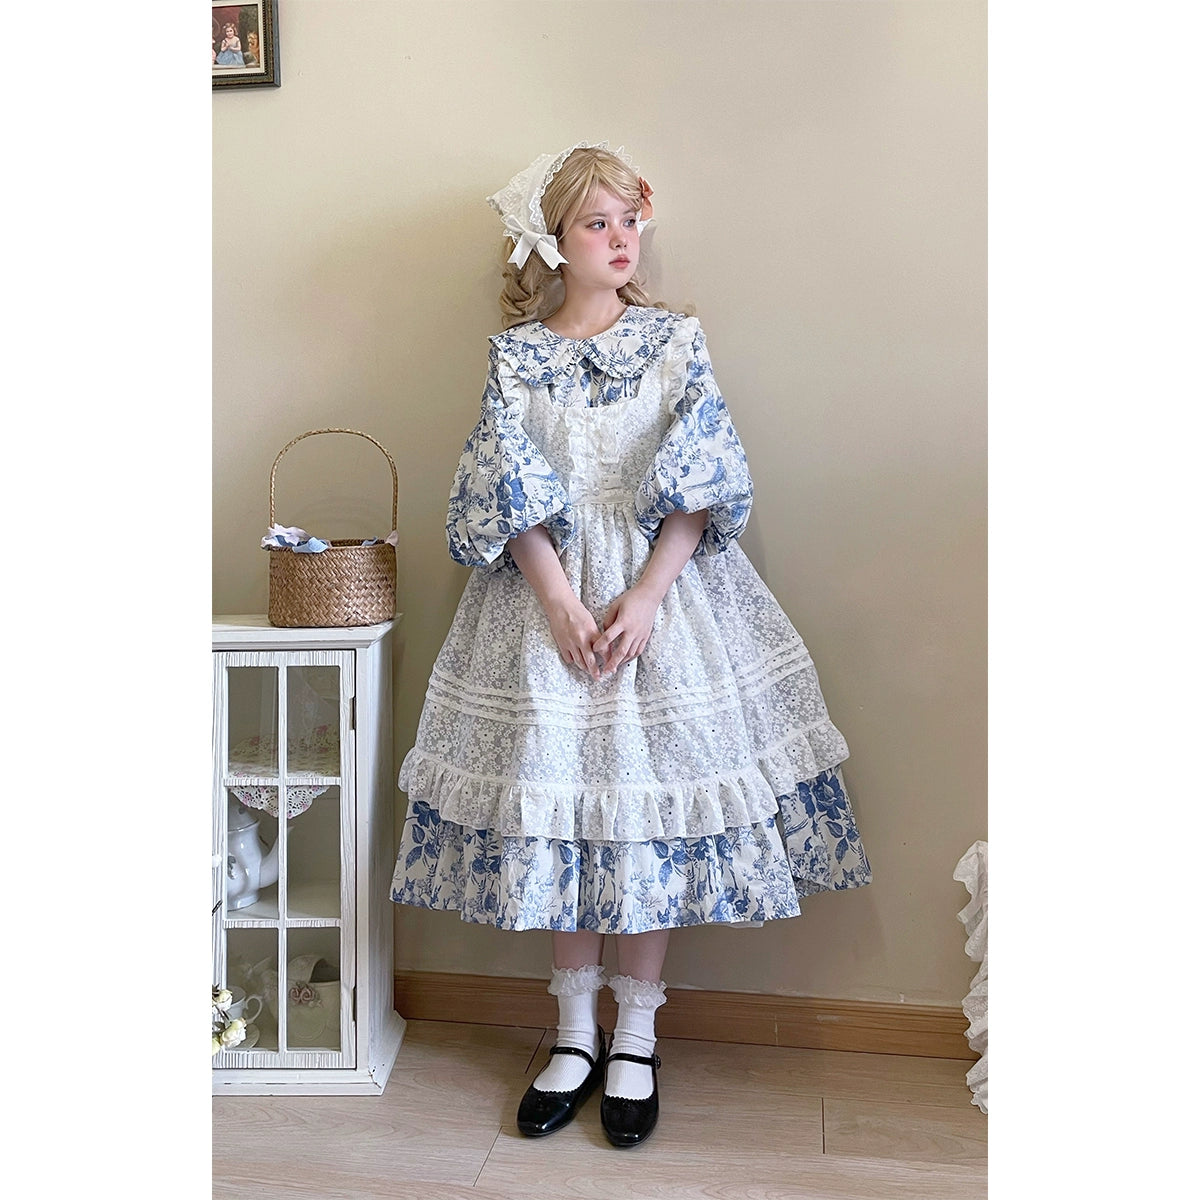 Mori Kei Apron White Lace Floral Apron Dress Suspender Skirt (White) 36556:531296